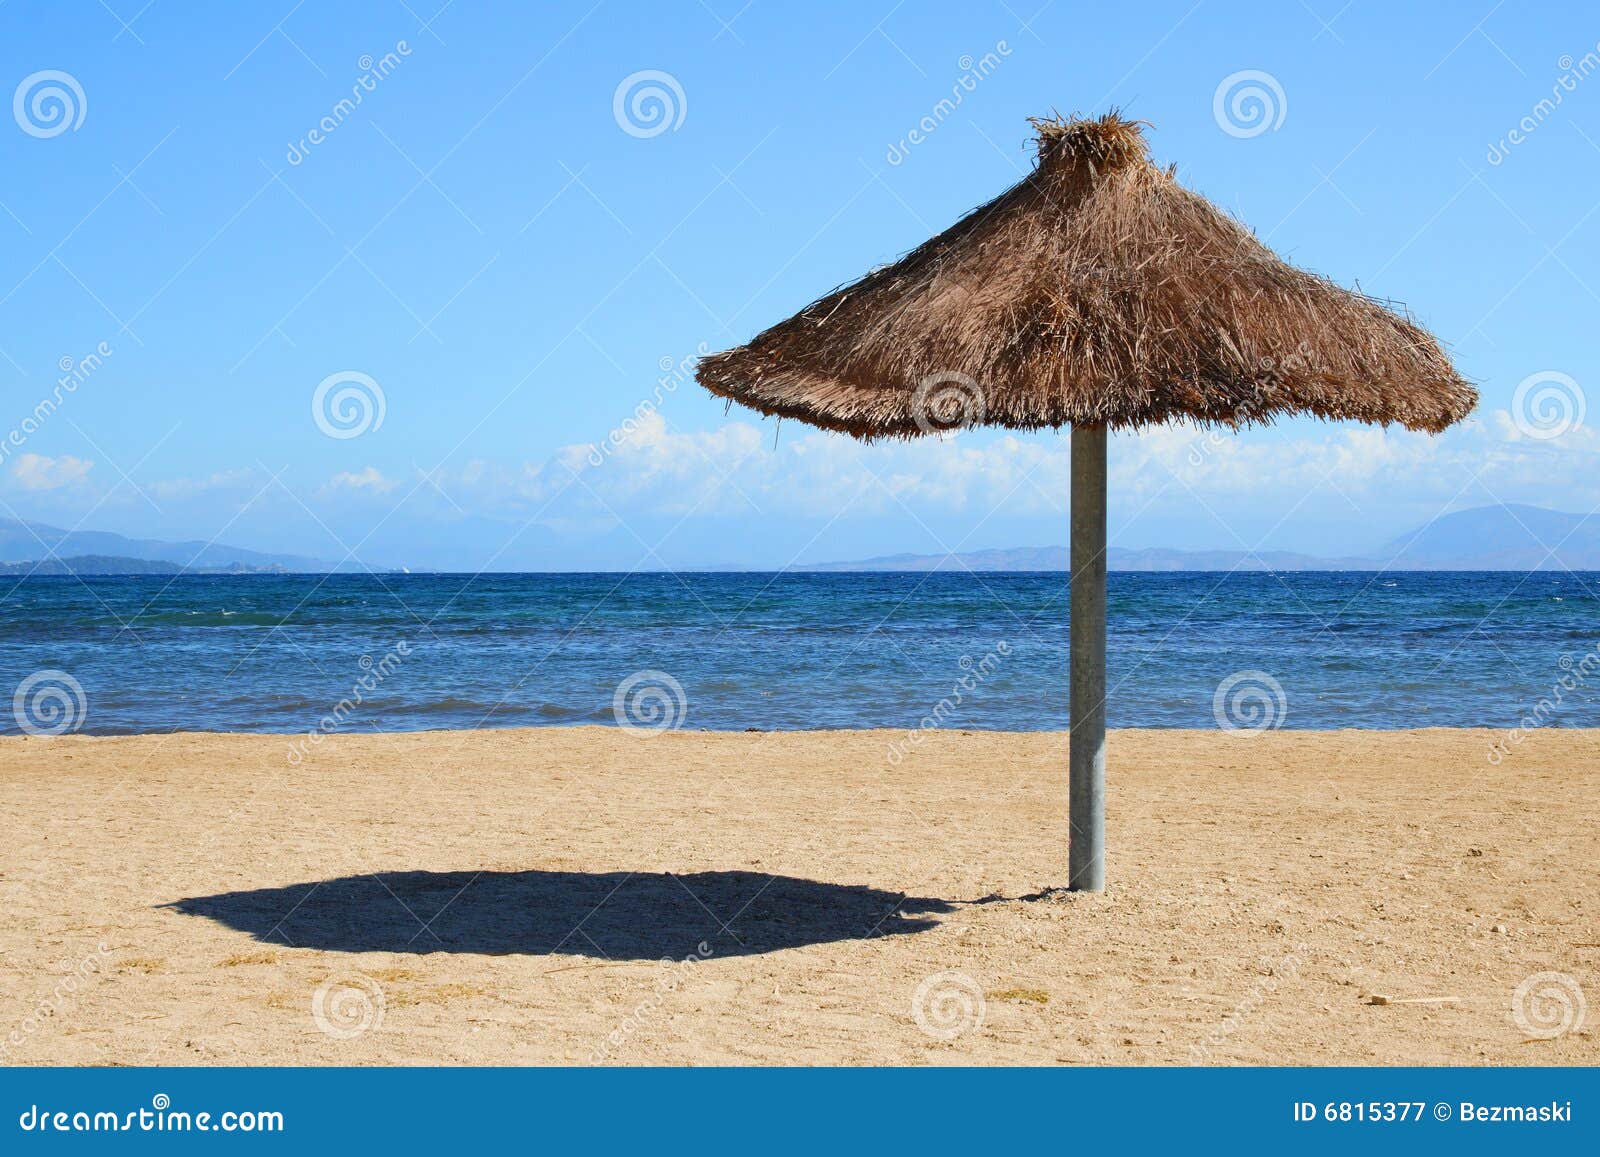 sunshade on beach